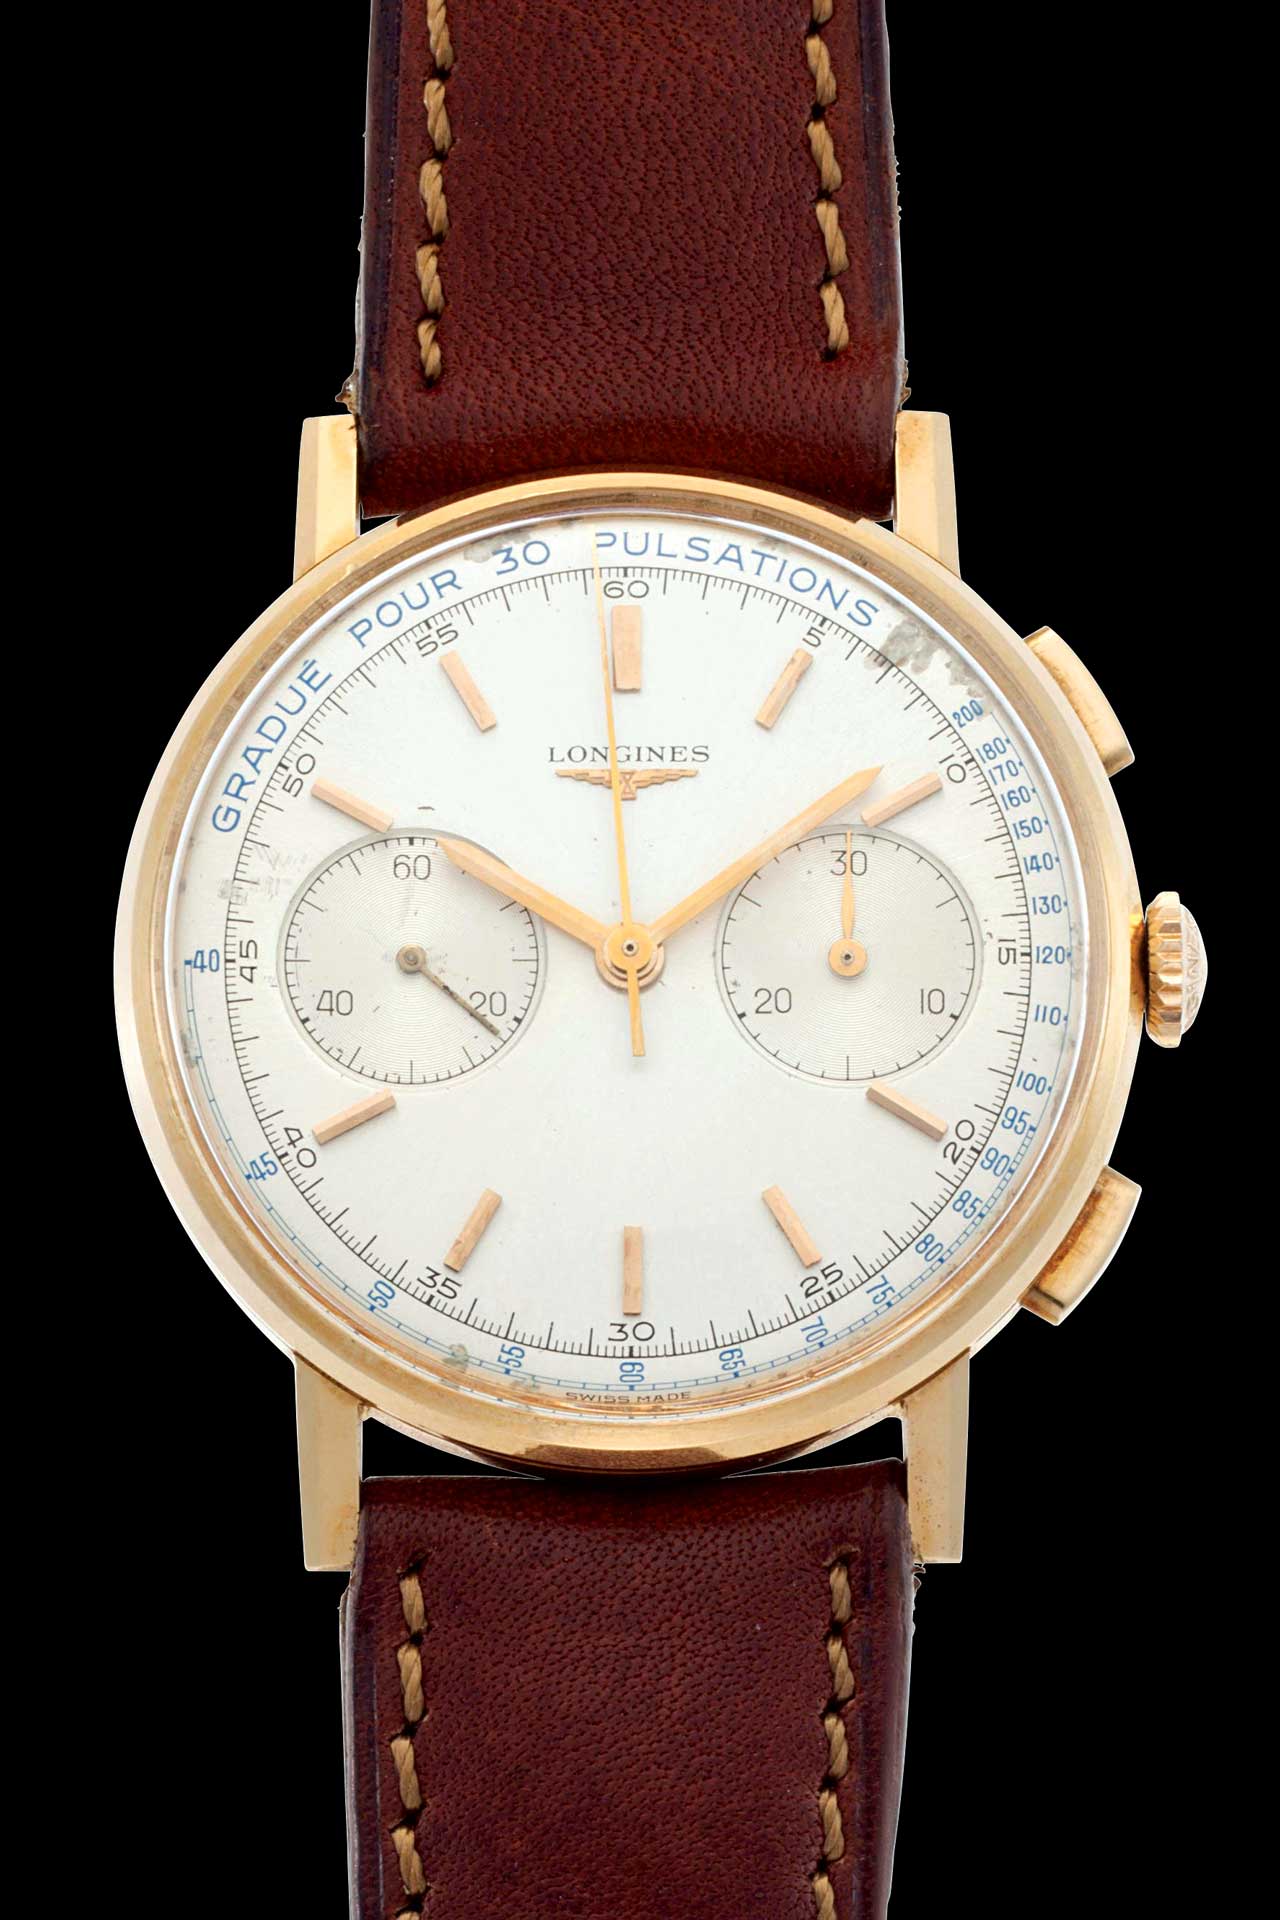 Longines 18k gold chronograph wristwatch, ref. 7414